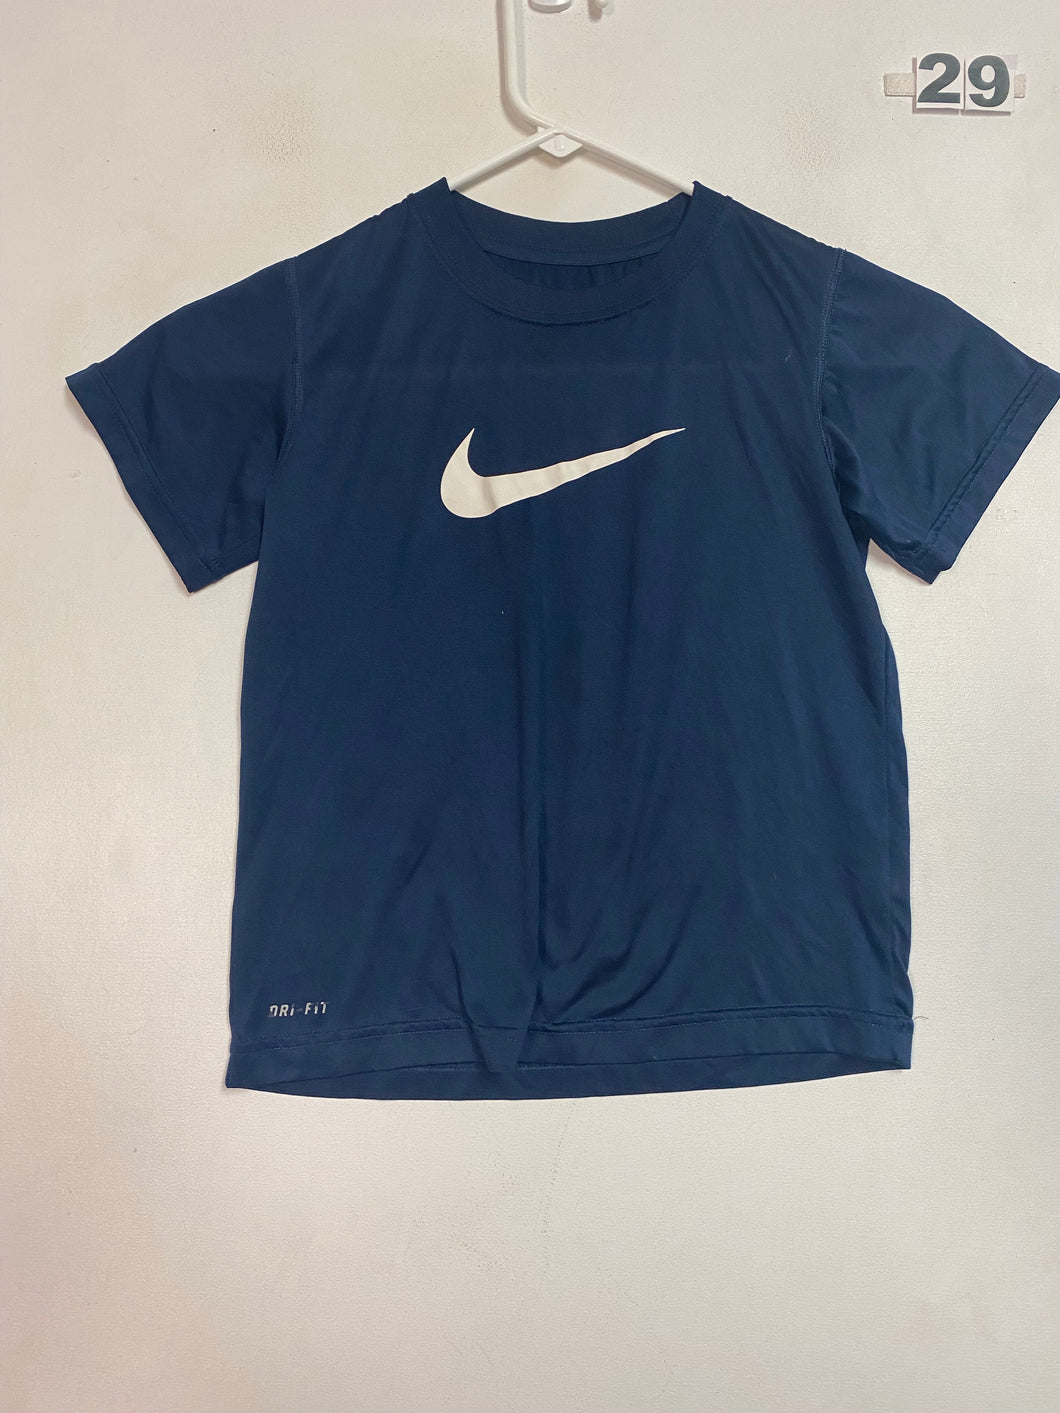 Boys S Nike Shirt